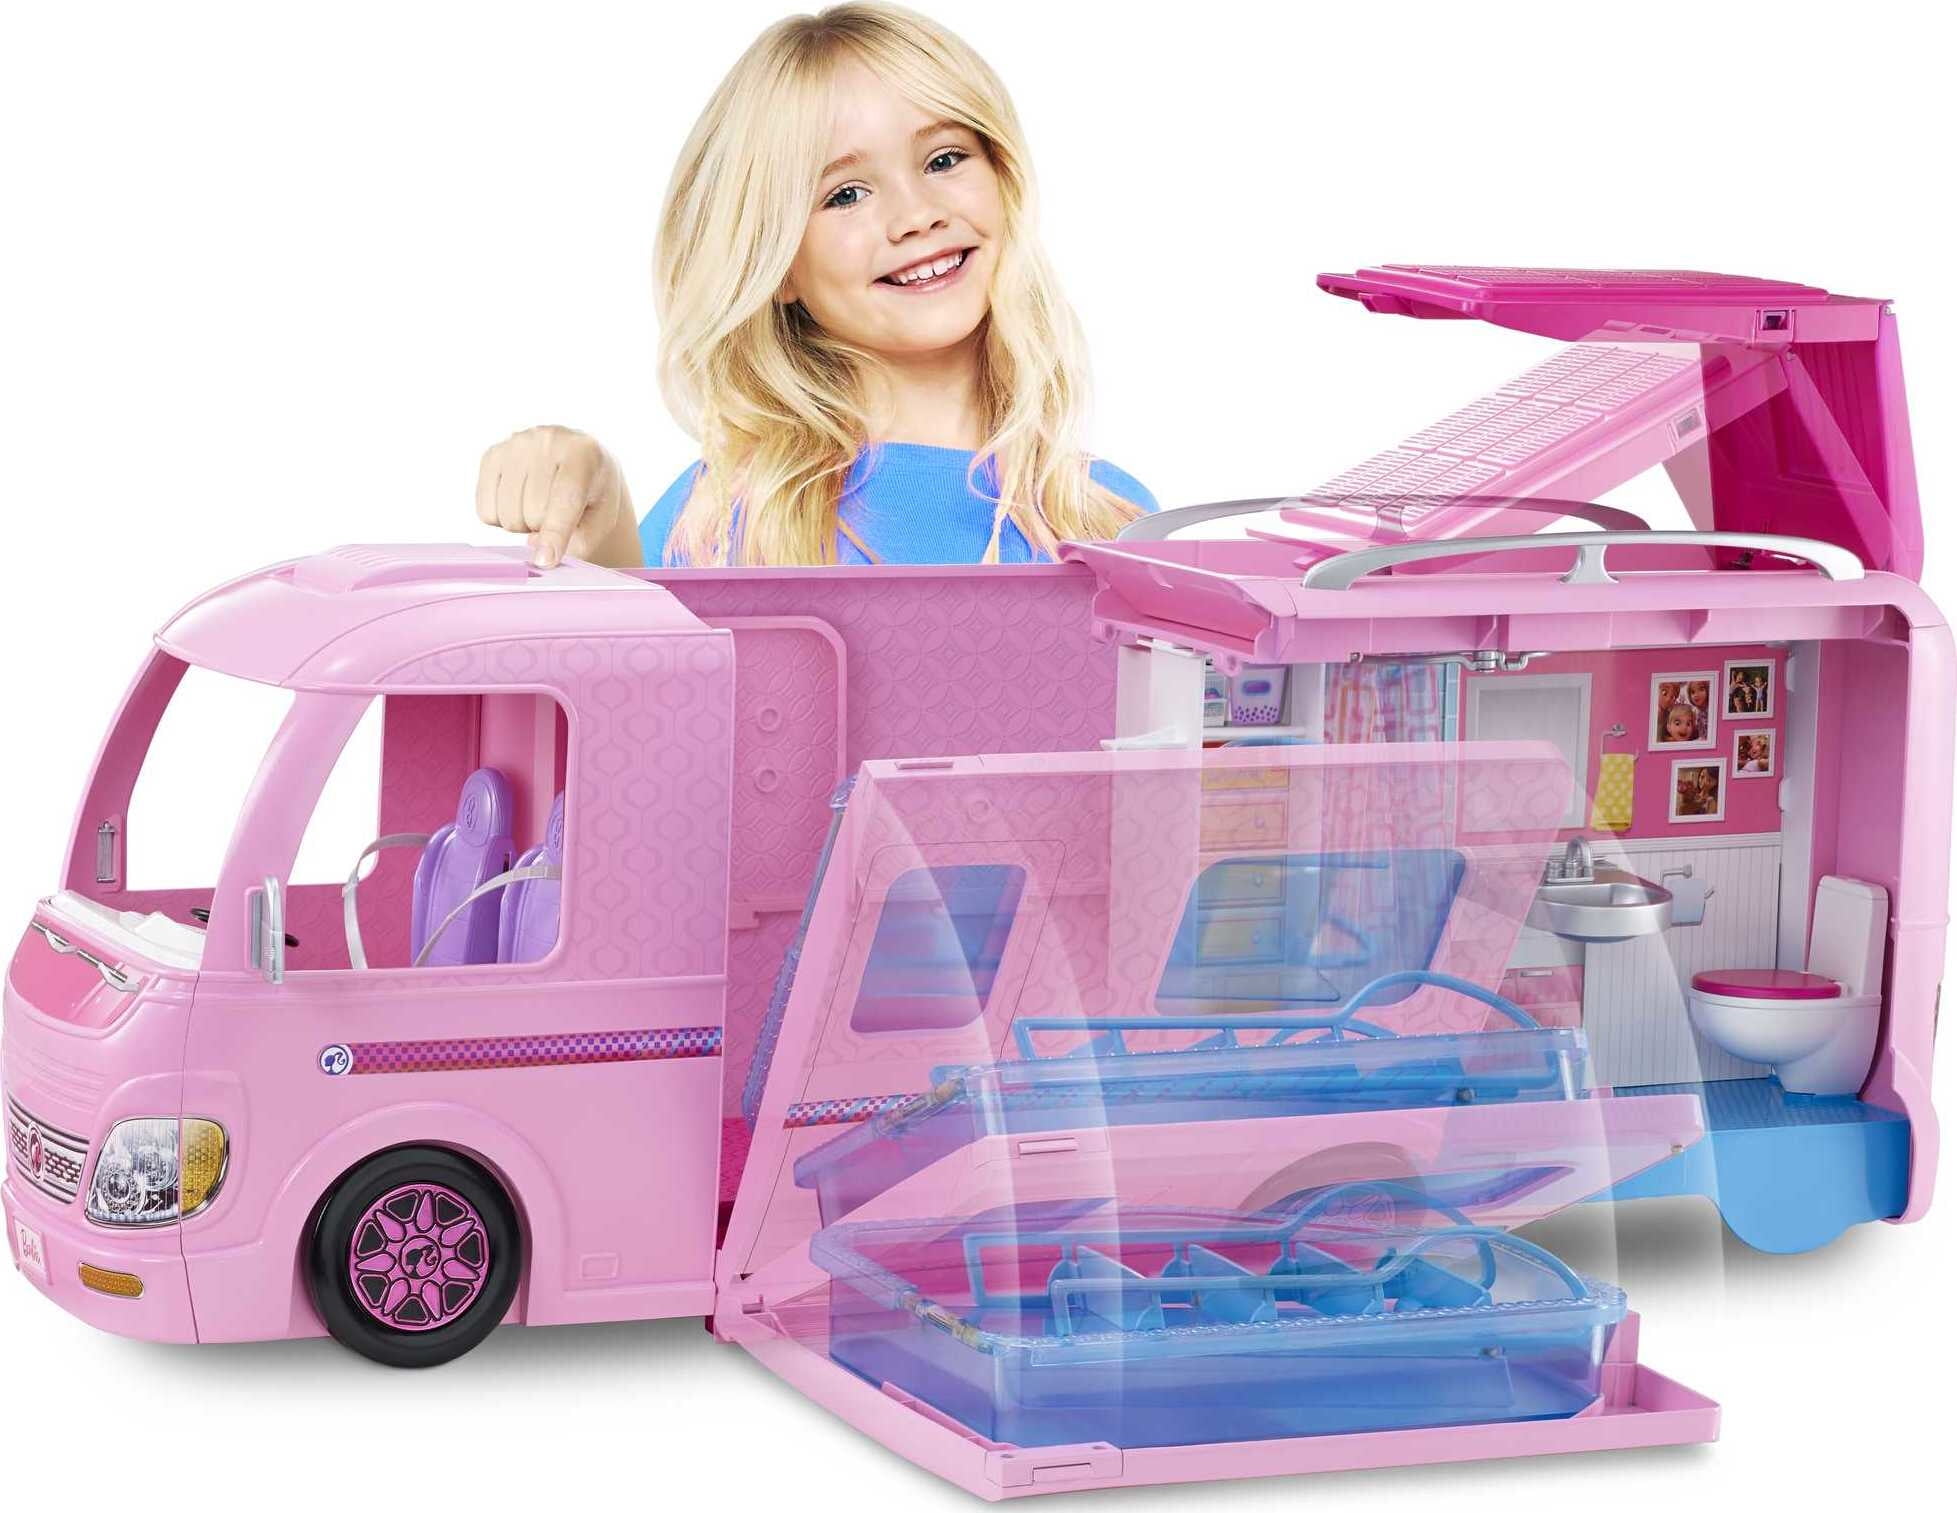 Stol Modregning veltalende Barbie Camper, Doll Playset with 50 Accessories and Waterslide, Dream Camper  - Walmart.com